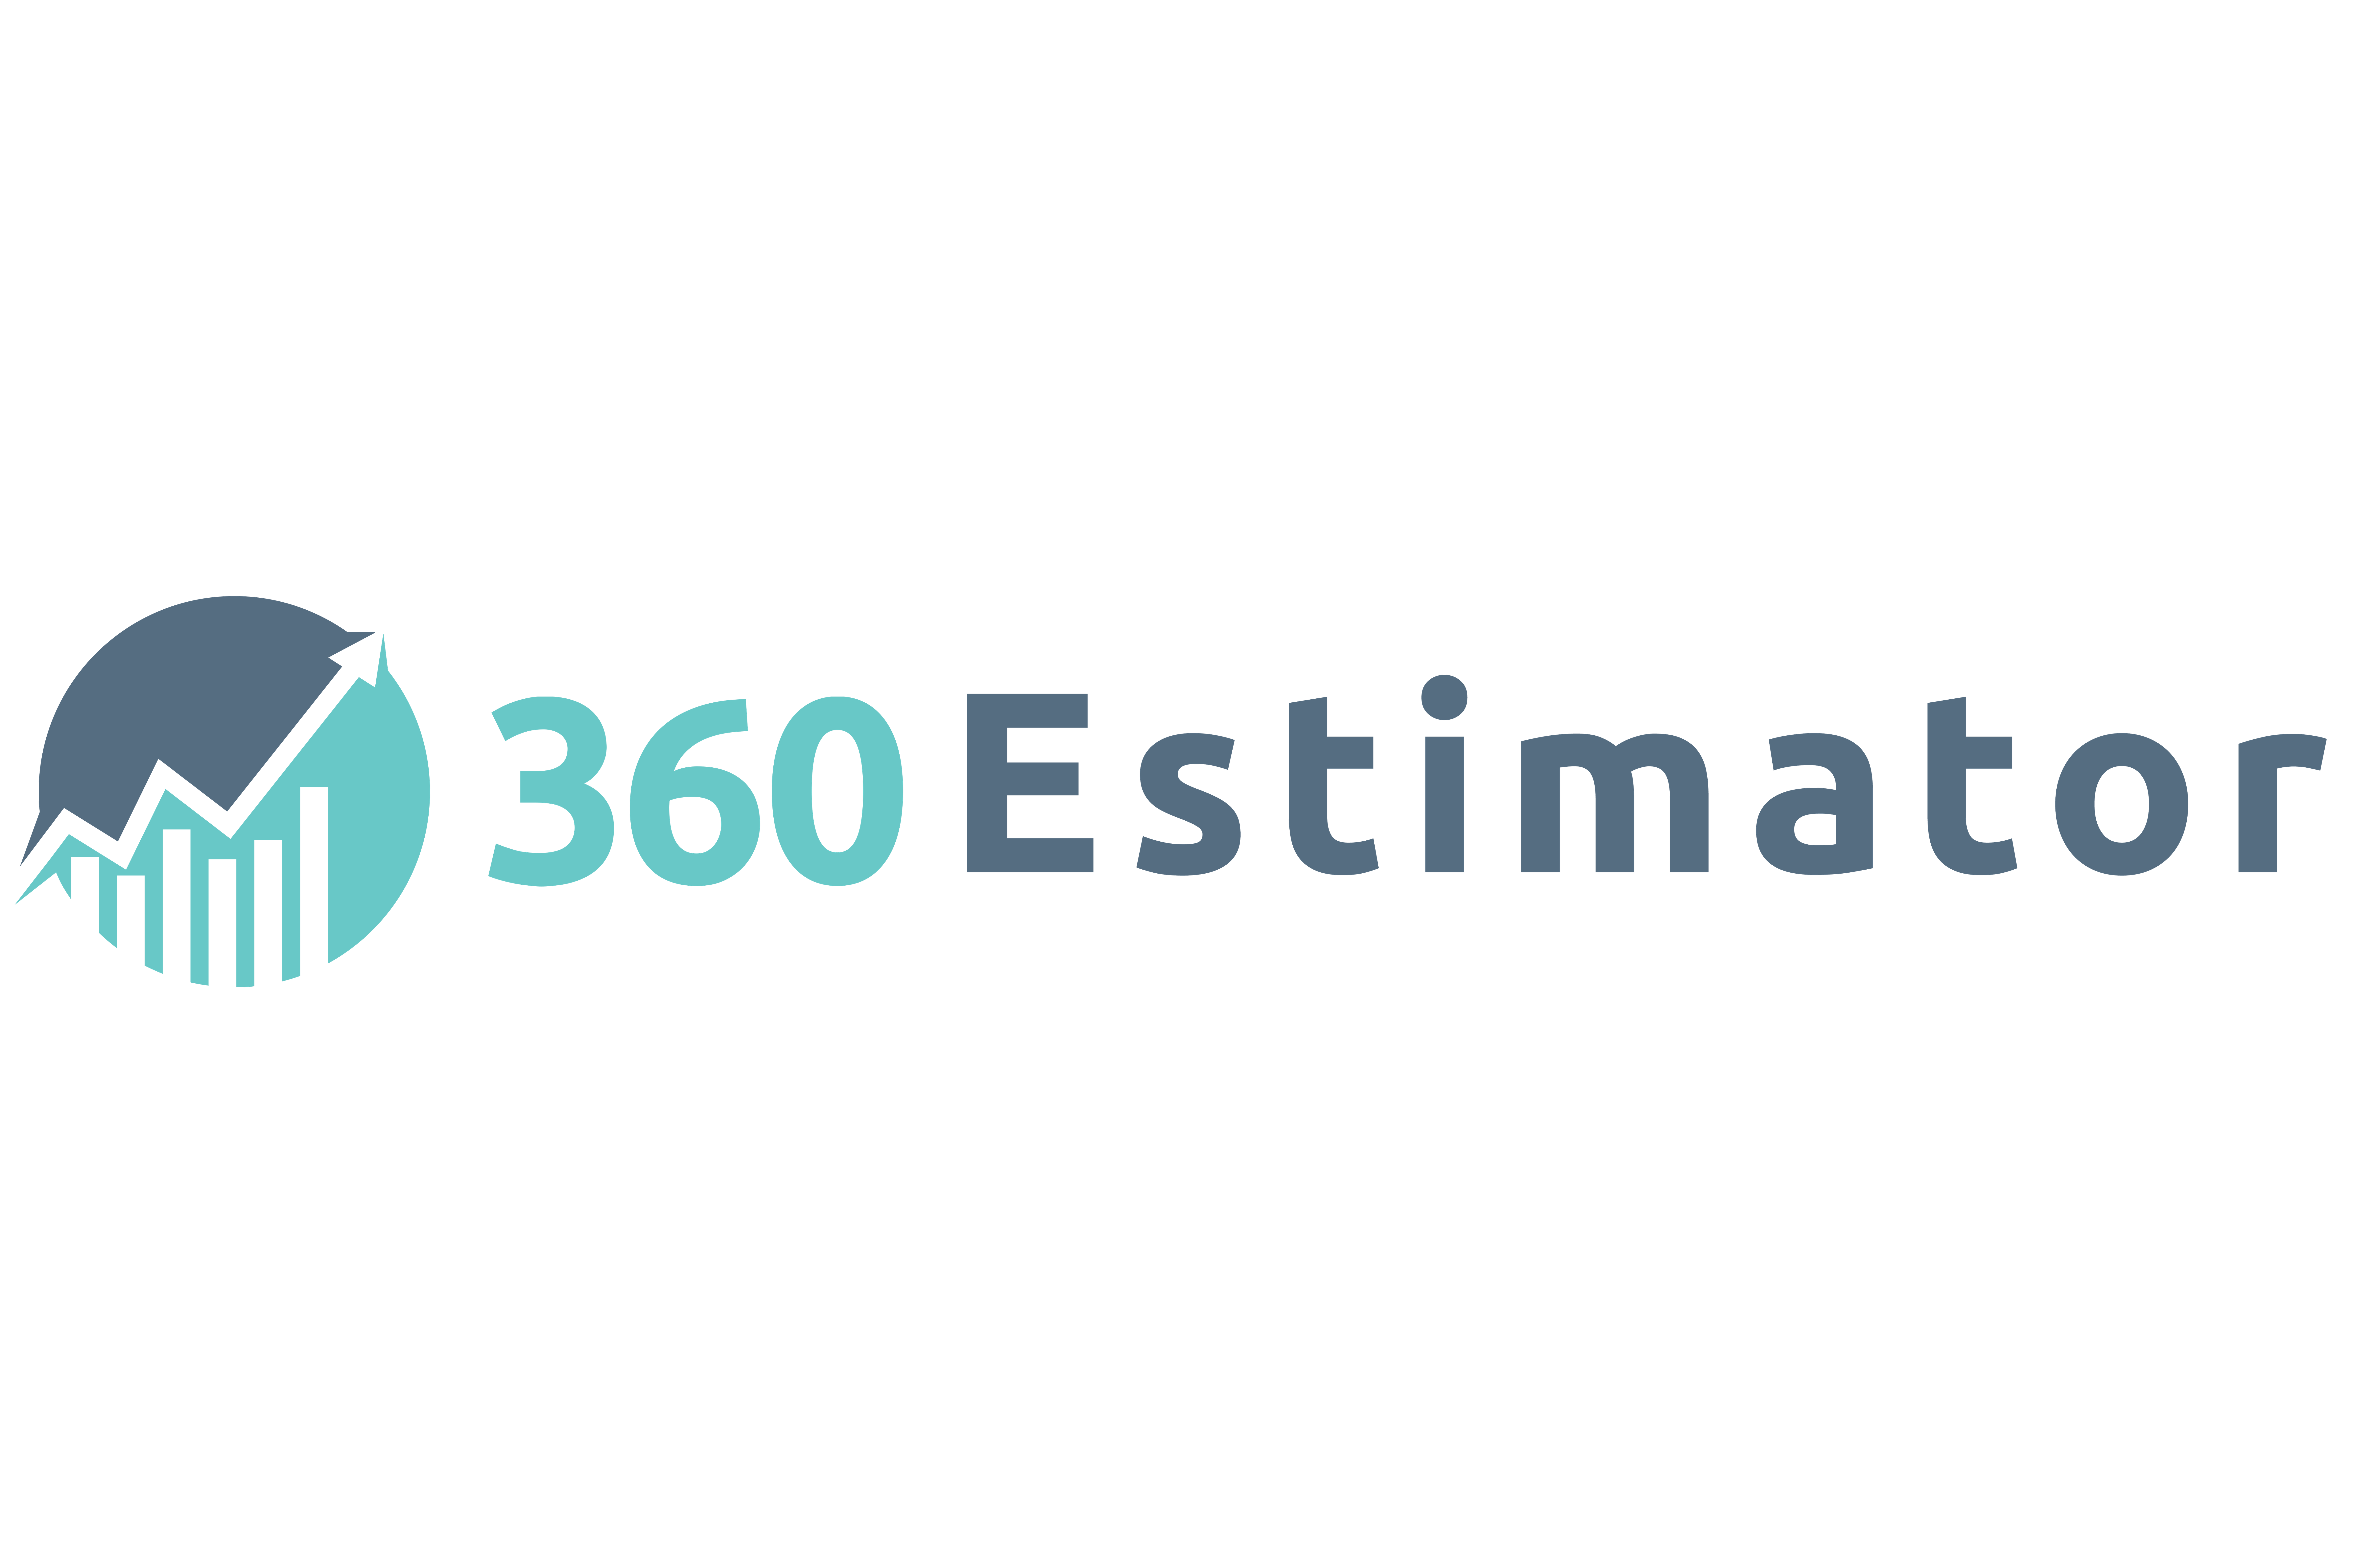 360 estimator